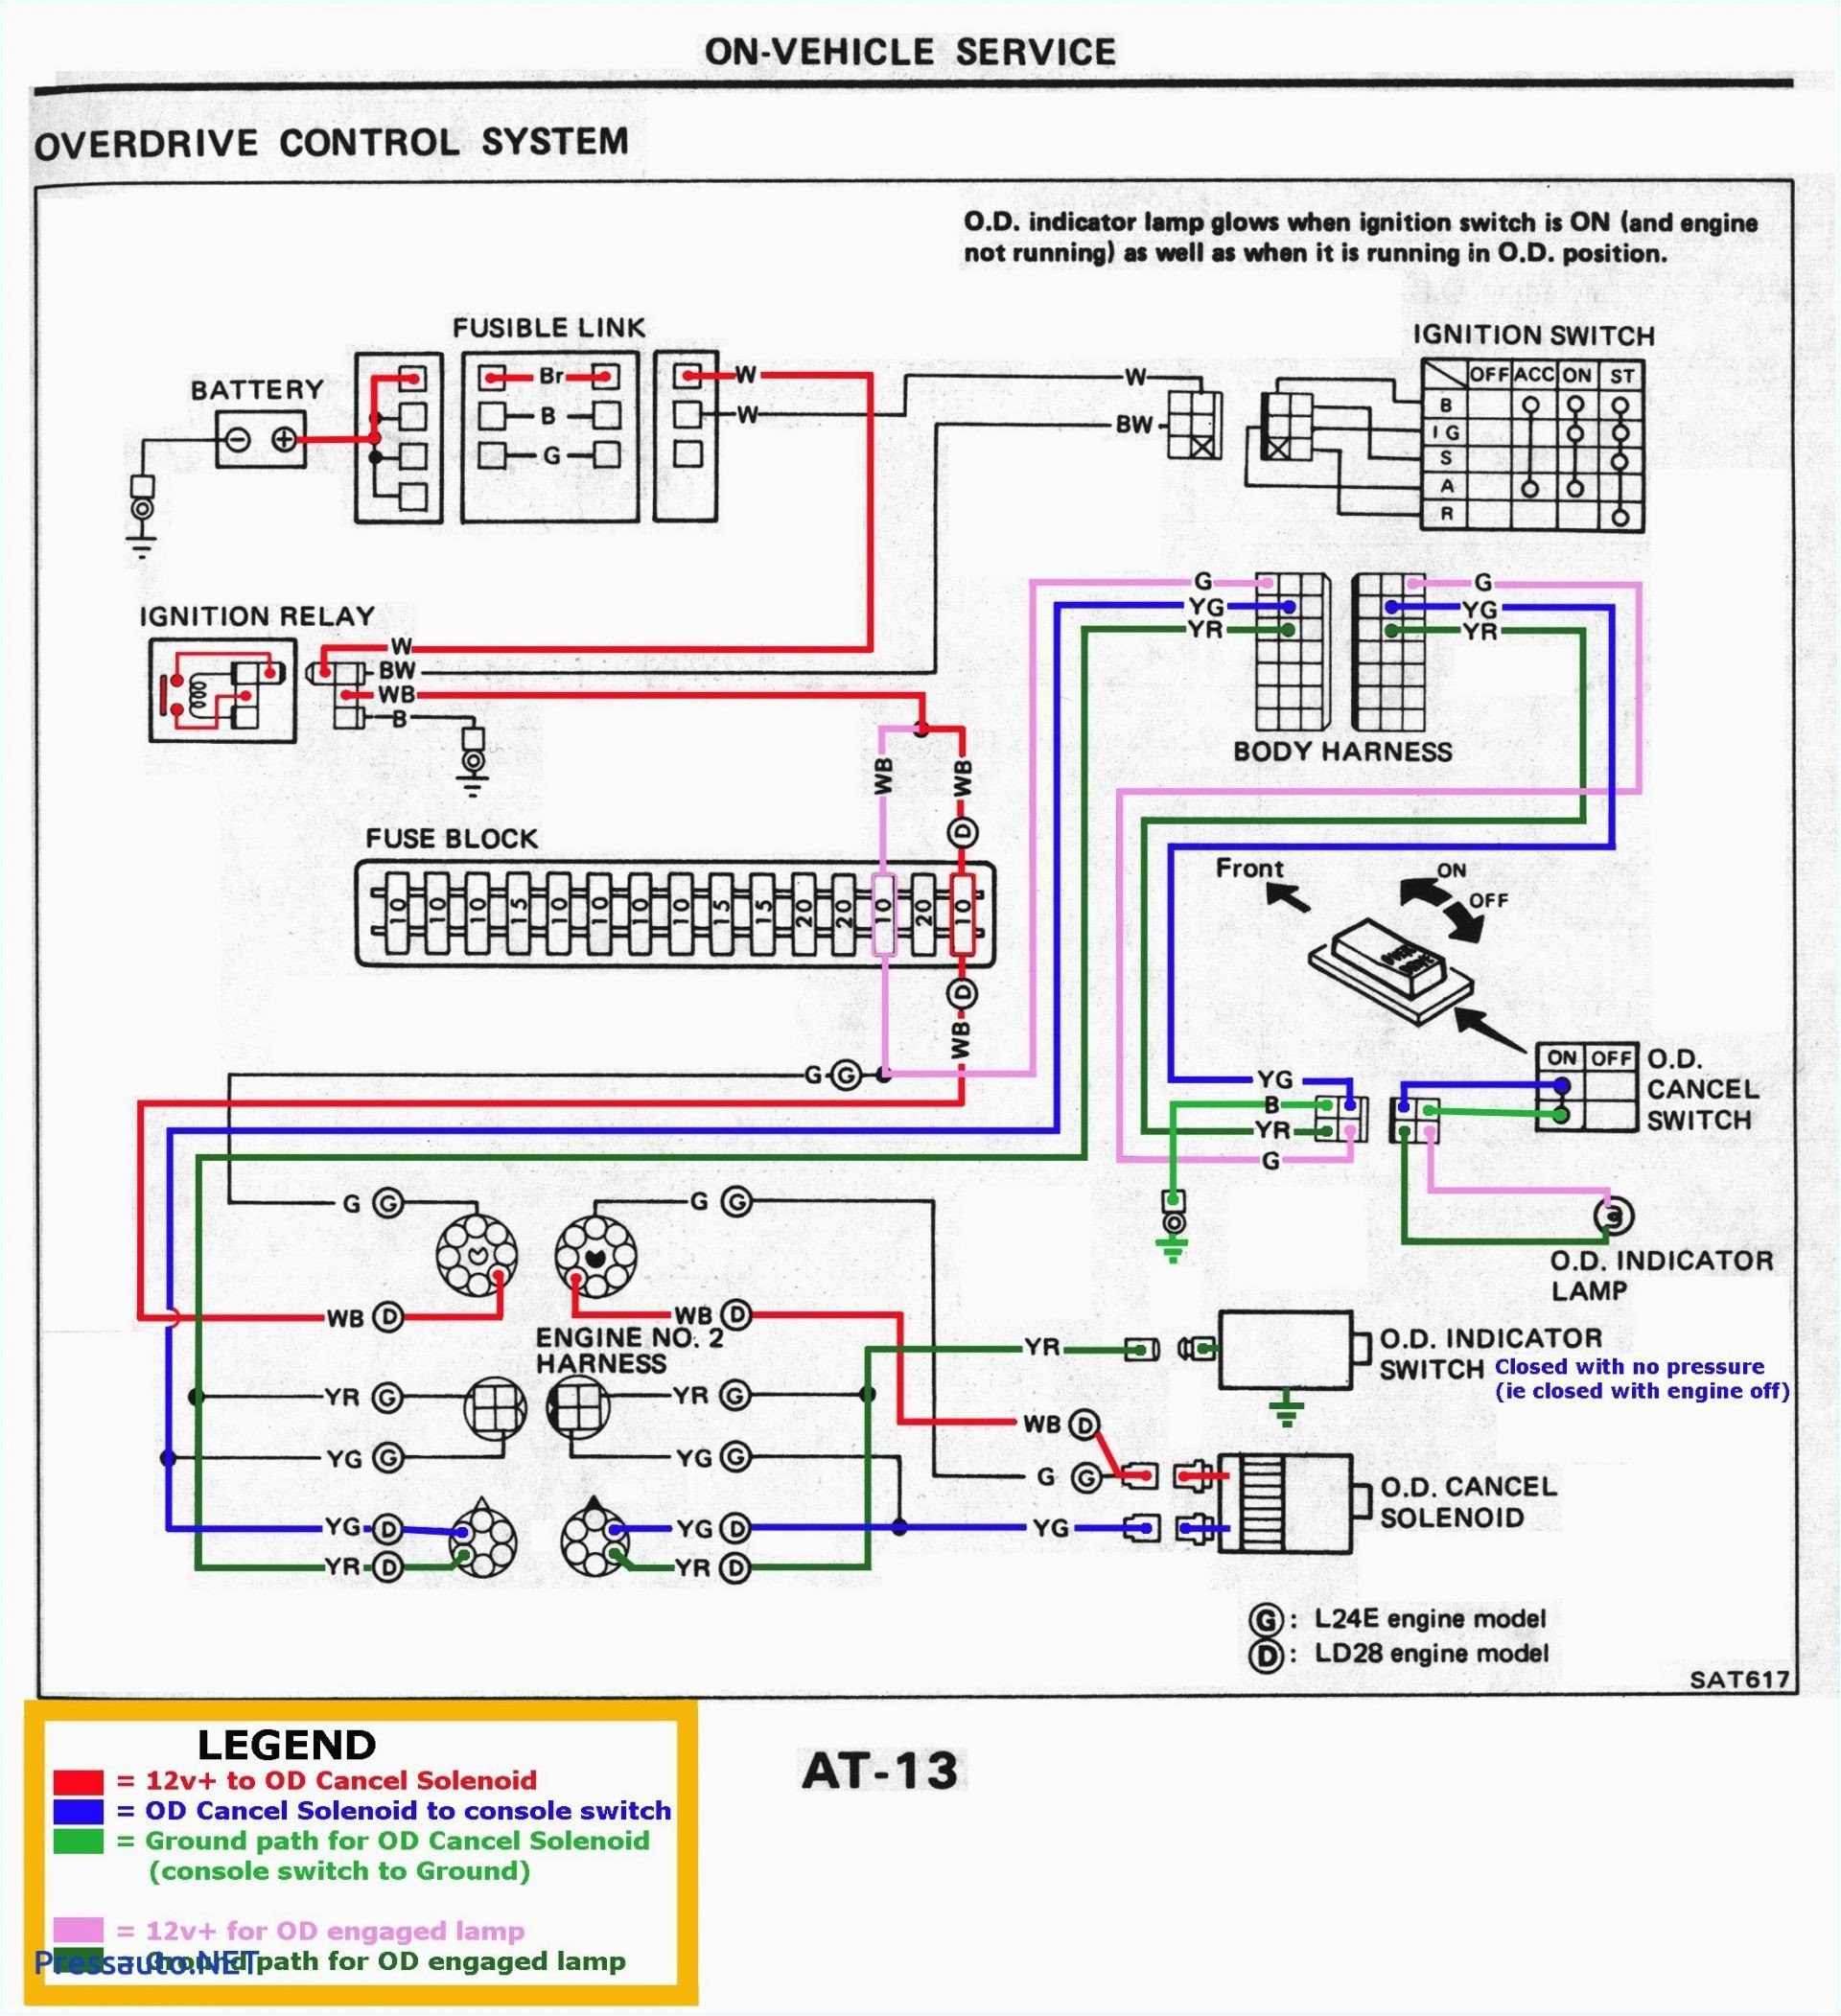 4105 viper remote start wiring diagrams wiring diagram library4105 viper remote start wiring diagrams wiring diagram